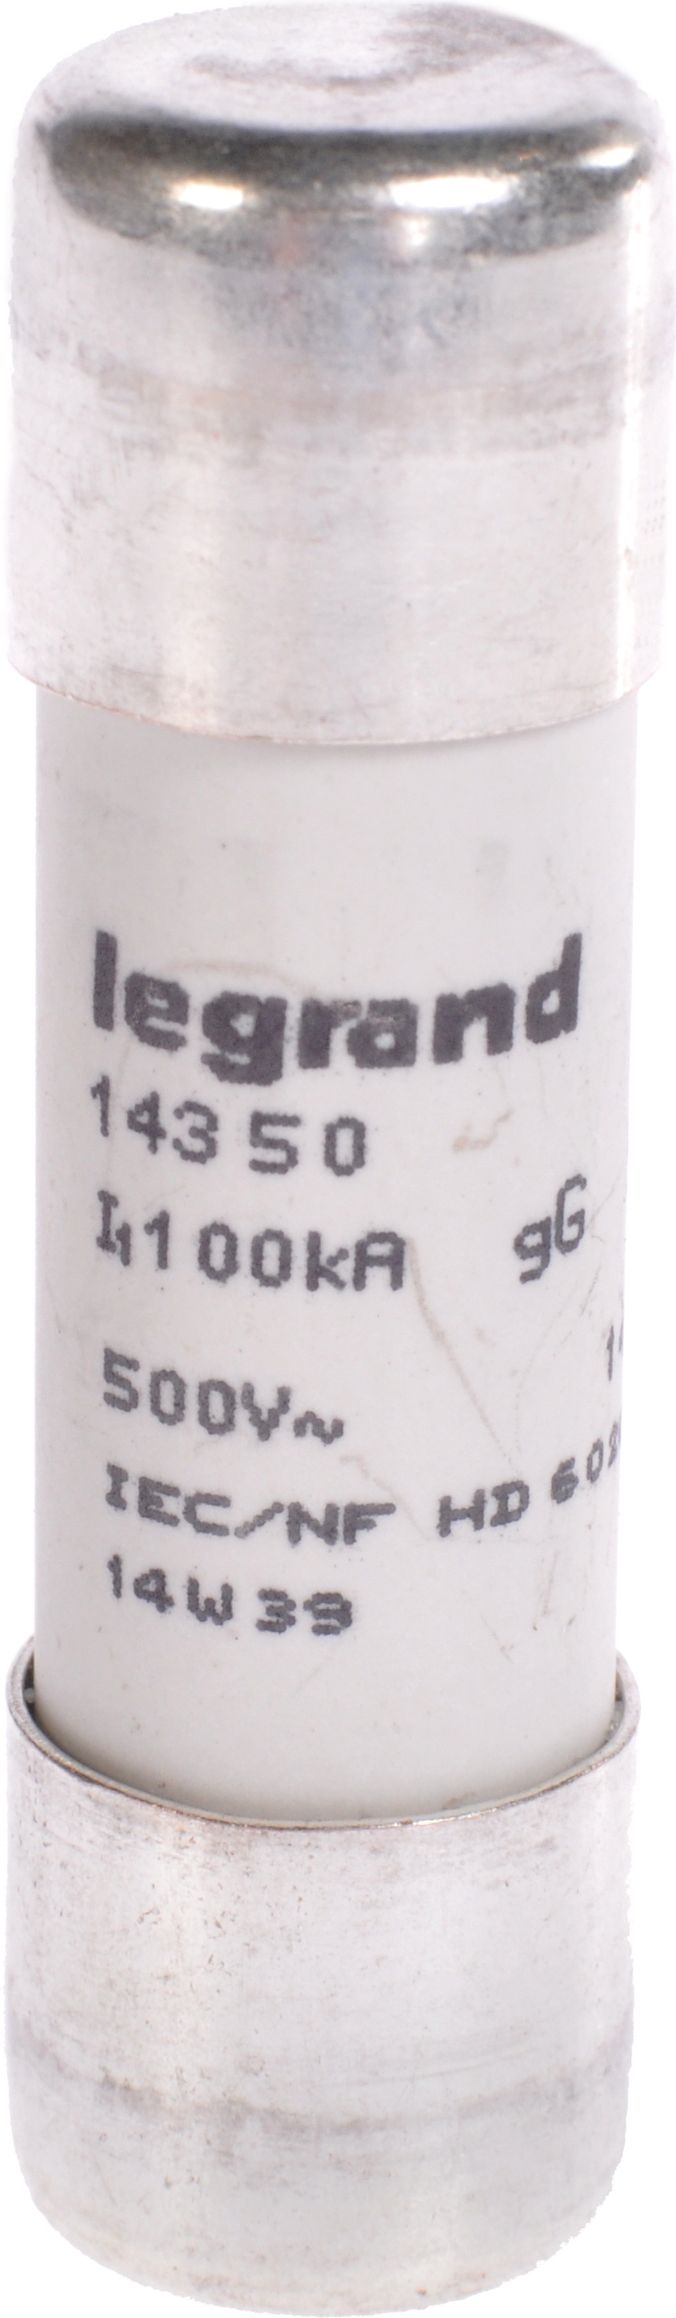 Siguranțe cilindrice 50A gL 500V HPC 14 x 51mm (014350)